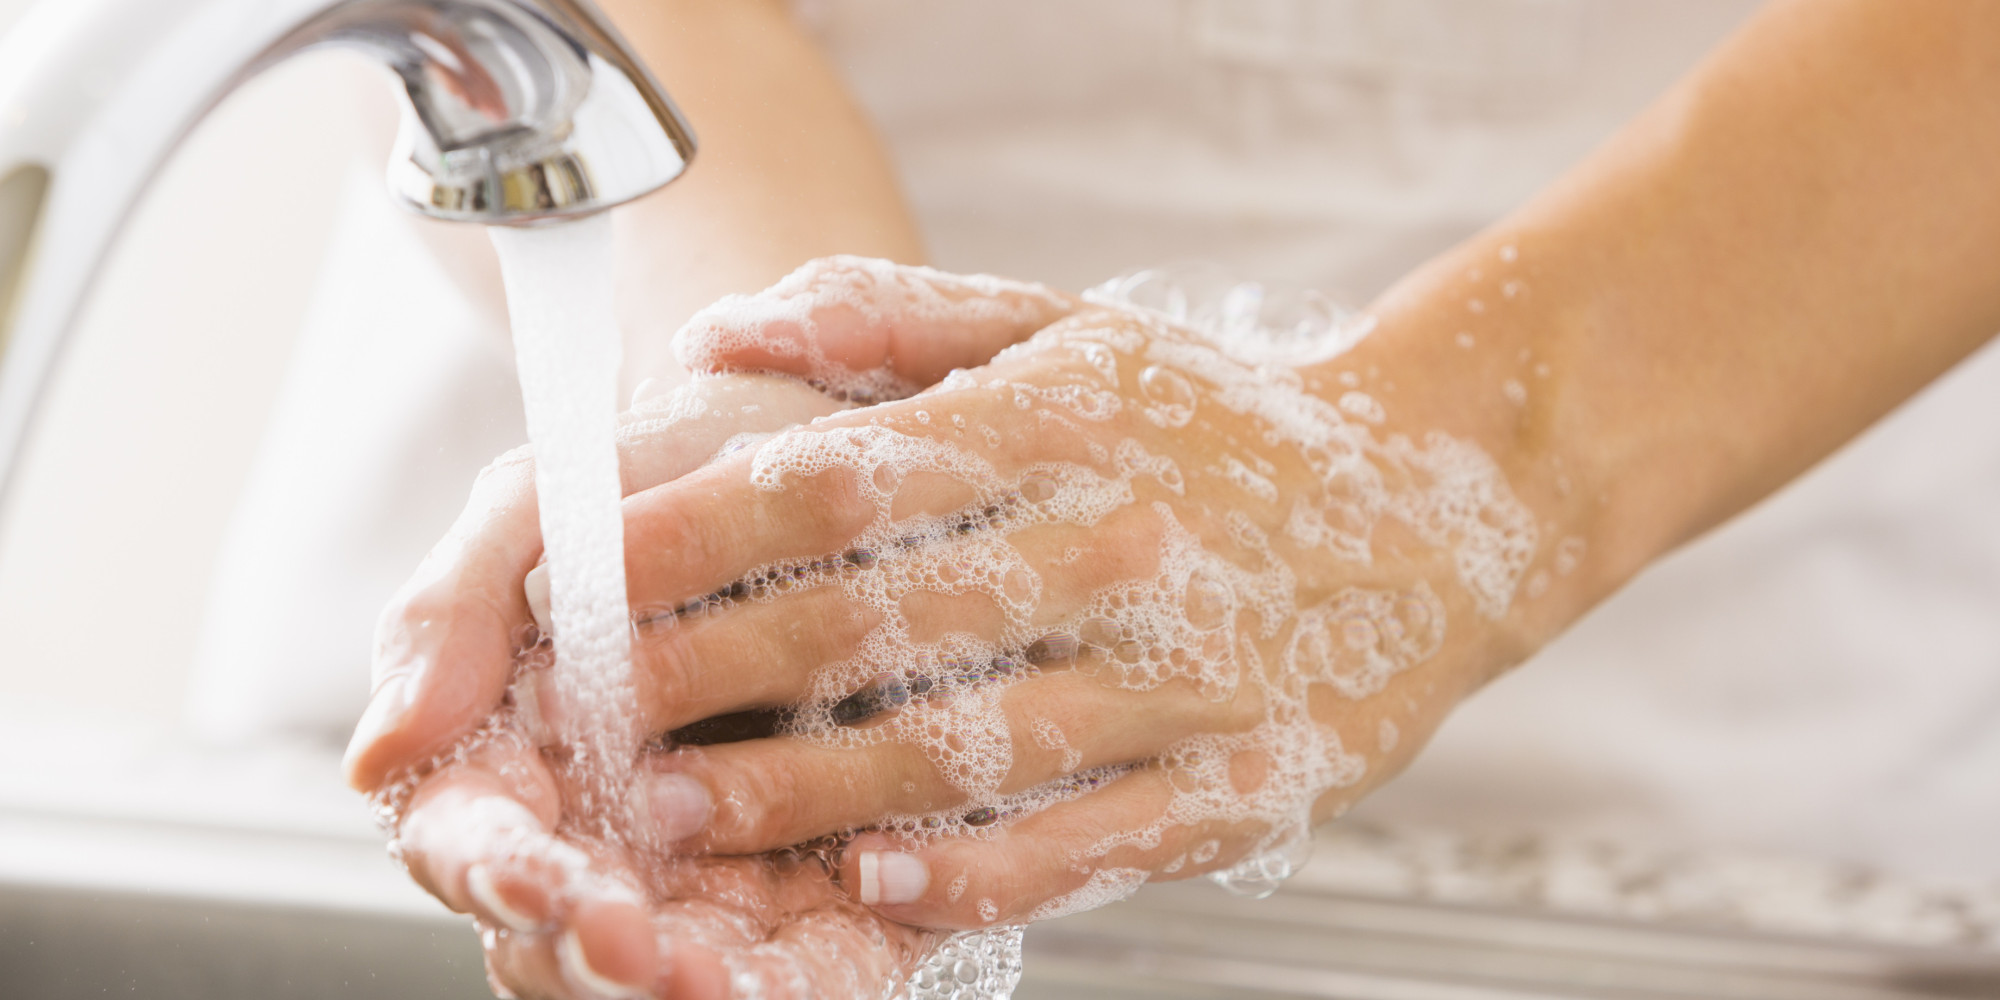 Lebih Efektif Mana, Cuci Tangan Pakai Air Panas atau Dingin?